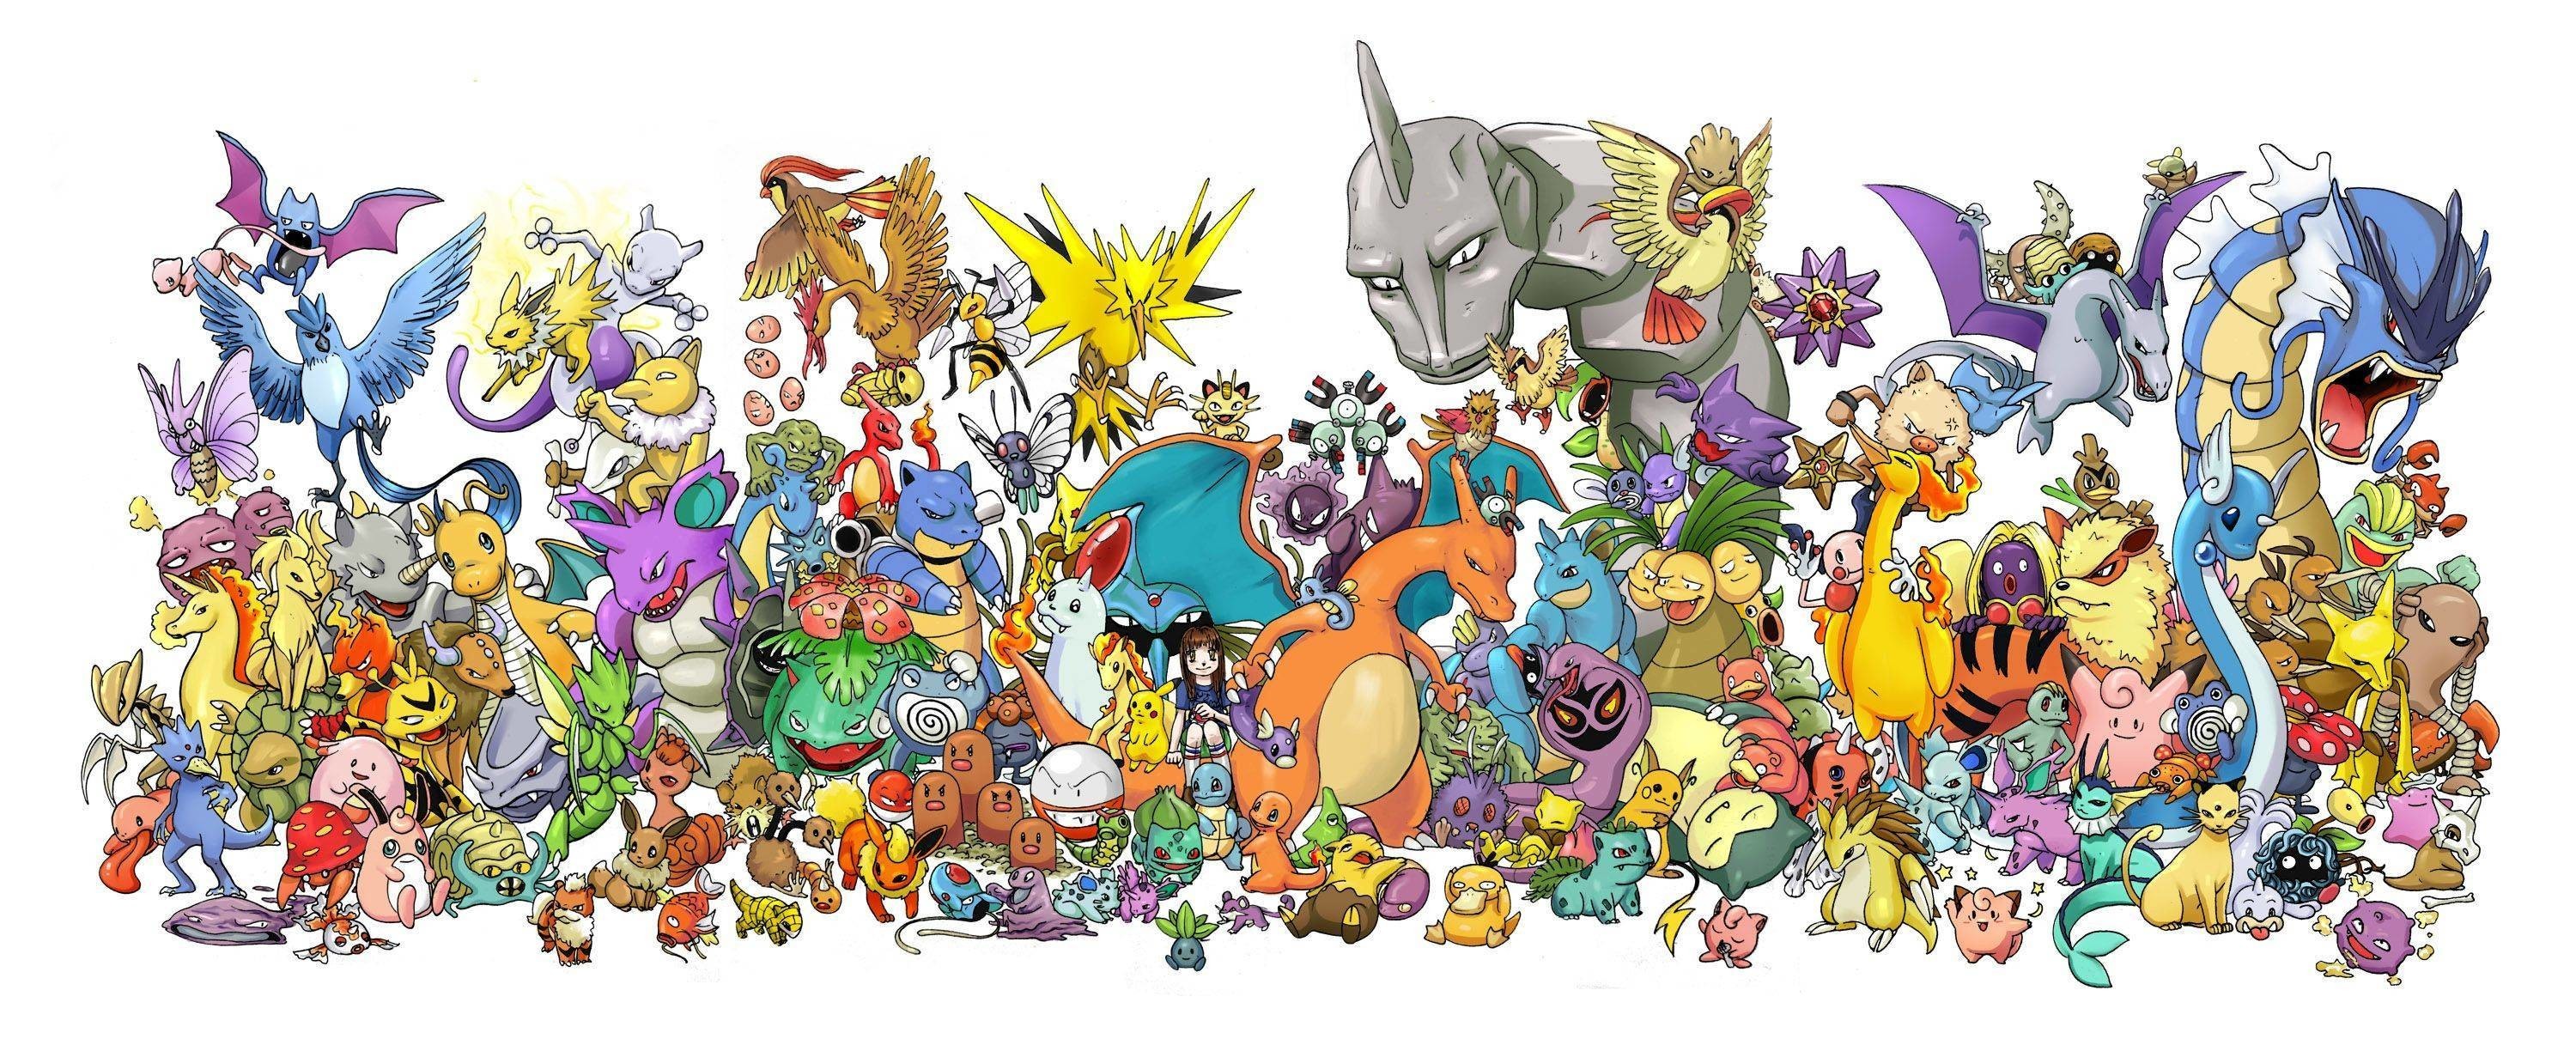 All Pokemon Wallpaper background picture